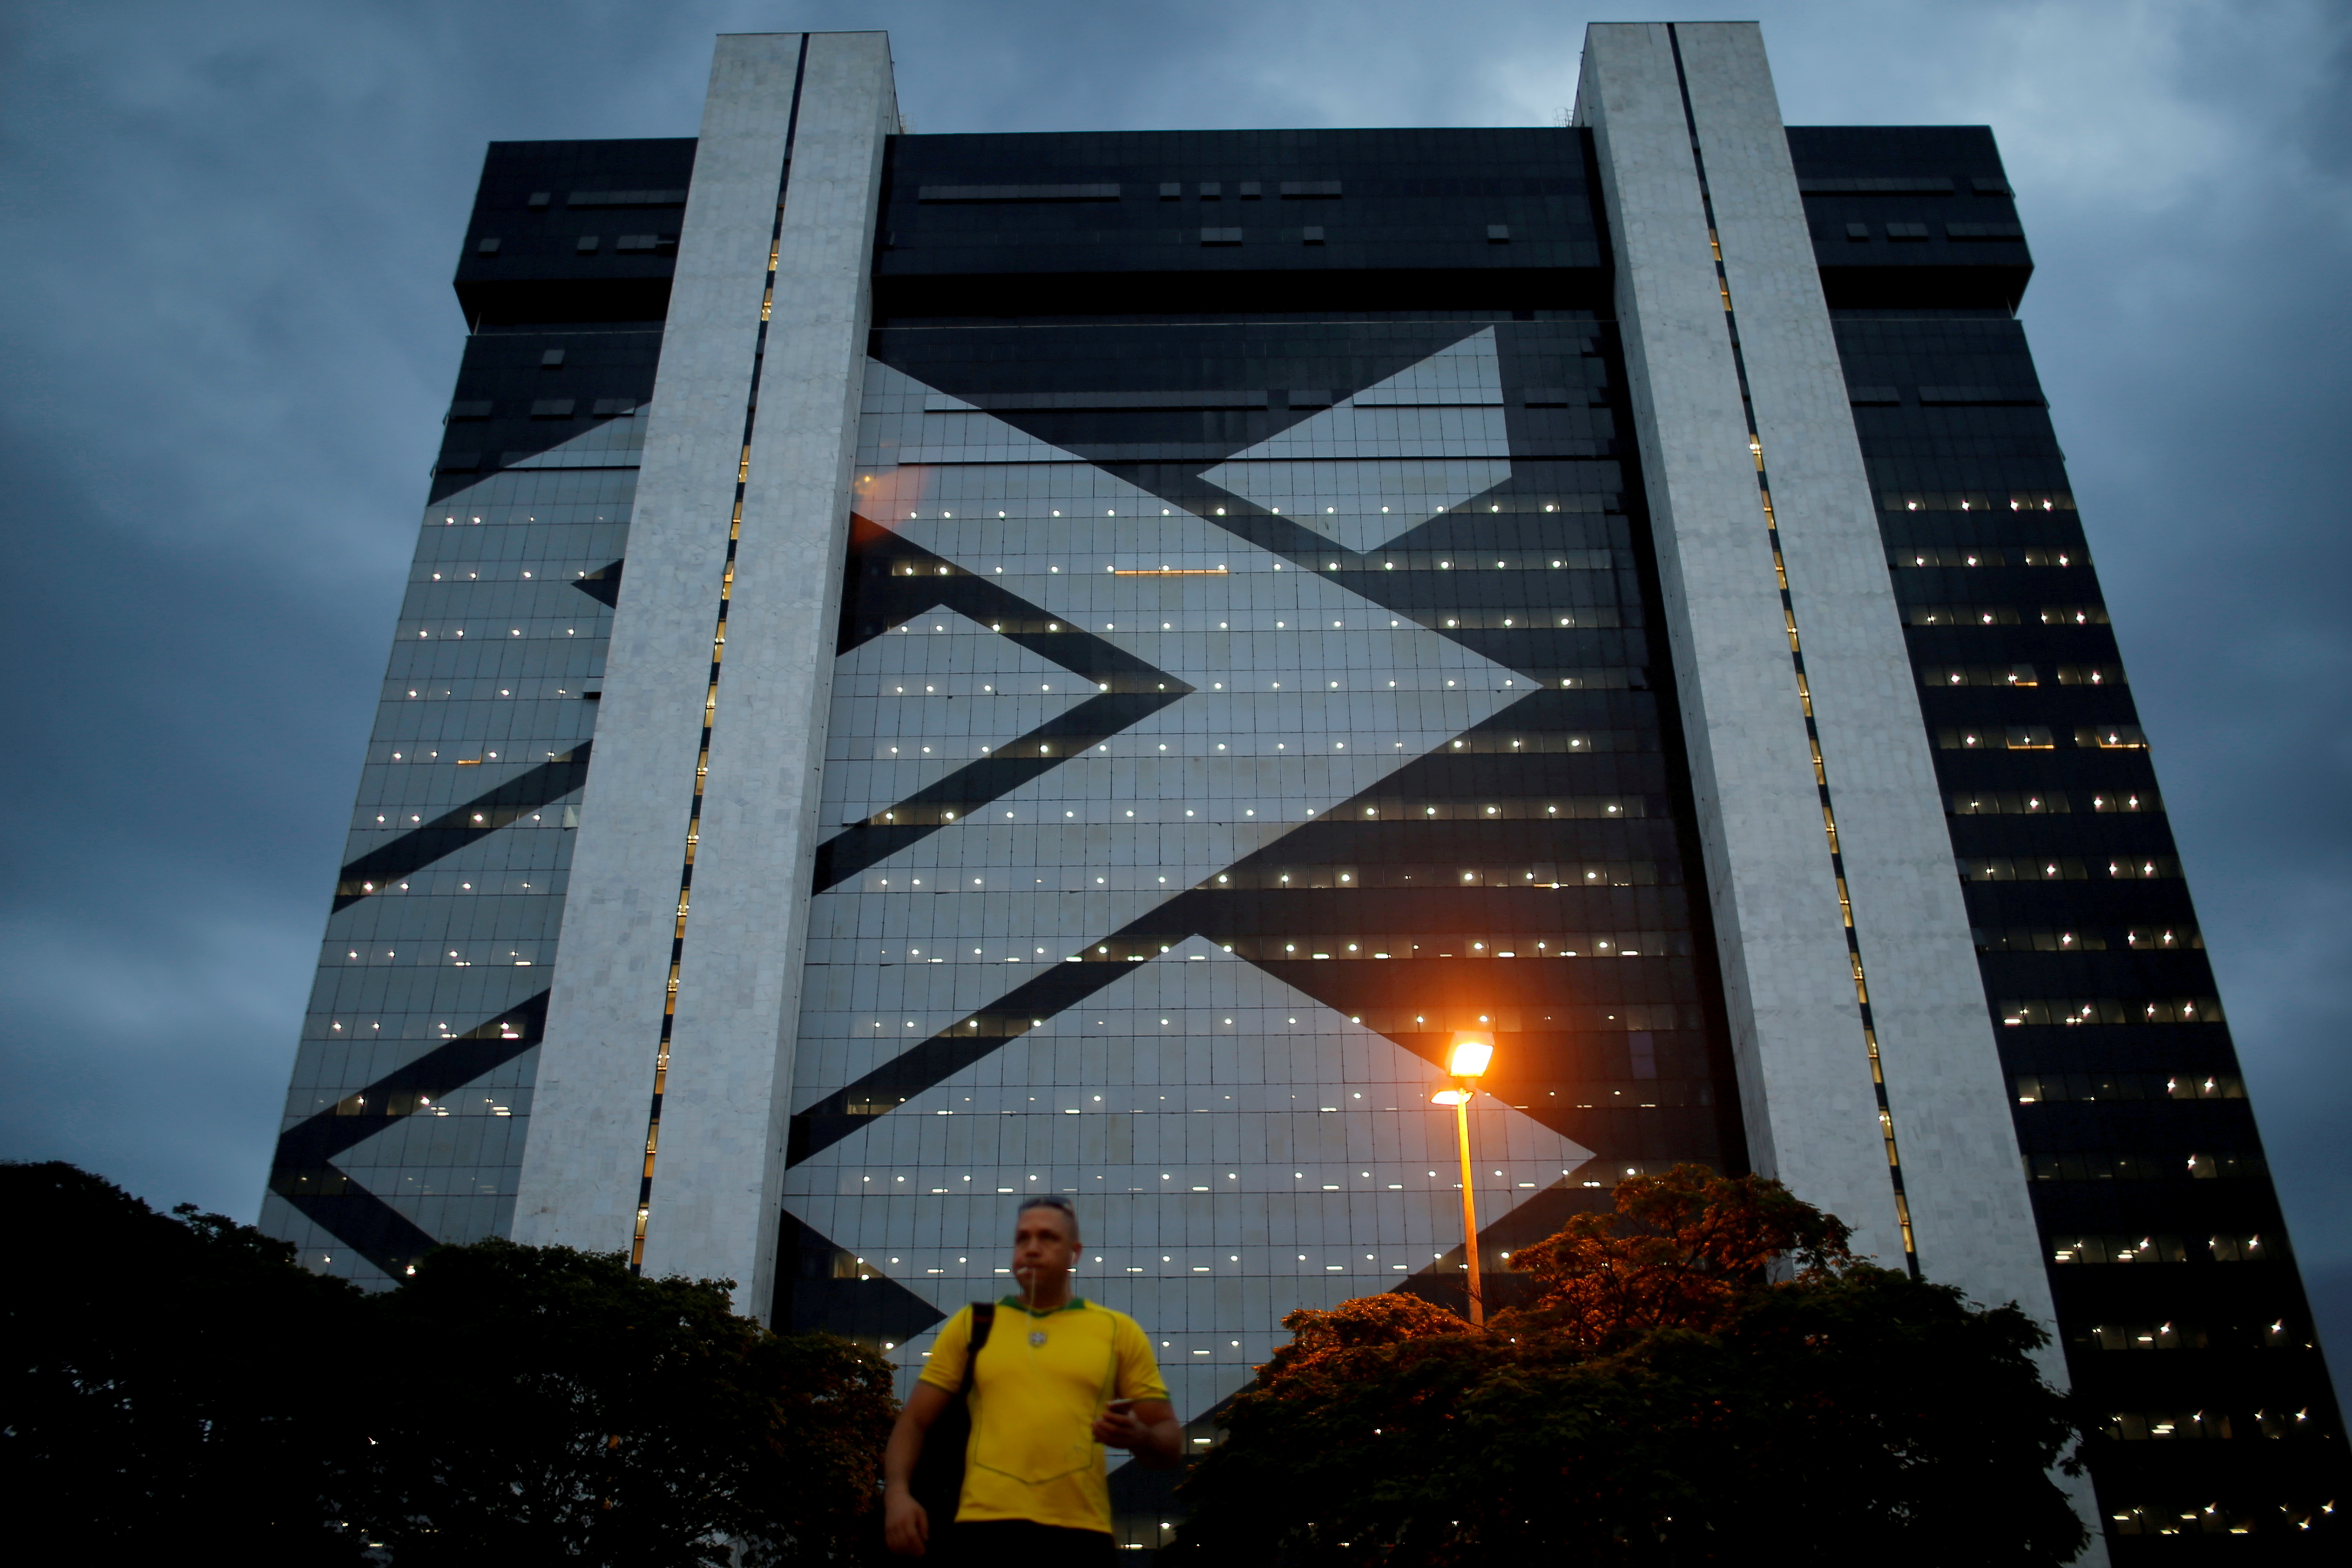 Banco de Brasília - Wikipedia